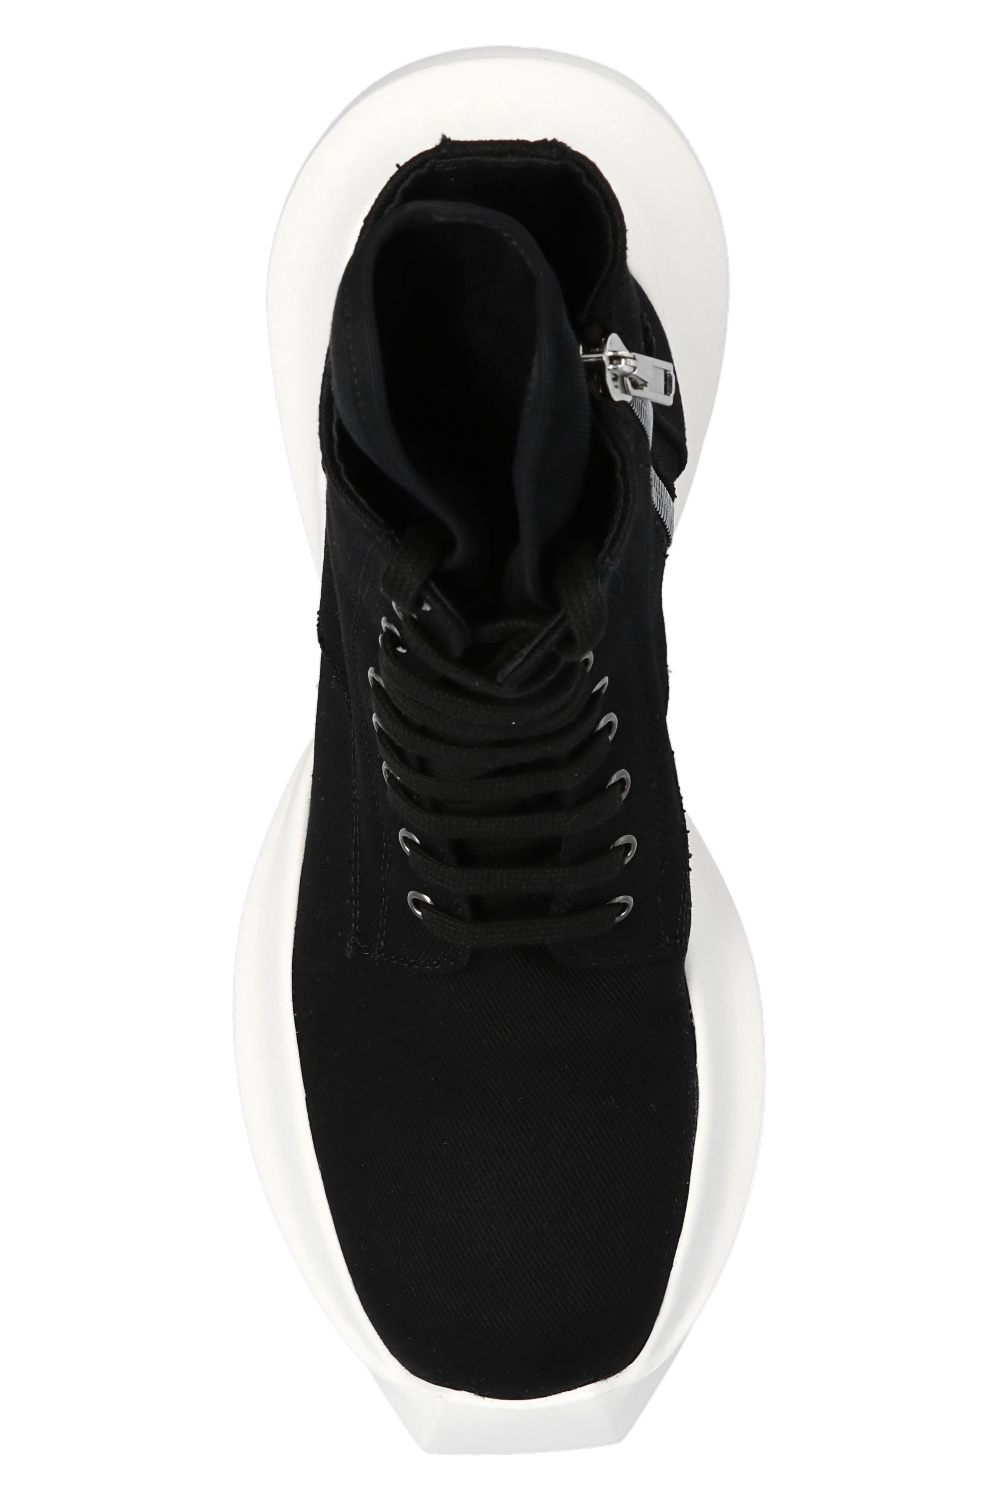 Nike Air Max TN Plus Herrenschuhe Turnschuhe Sneaker Blau 852630 412 SALE Sneakers Selvie2 FL5SV2 FAL12 WHITE